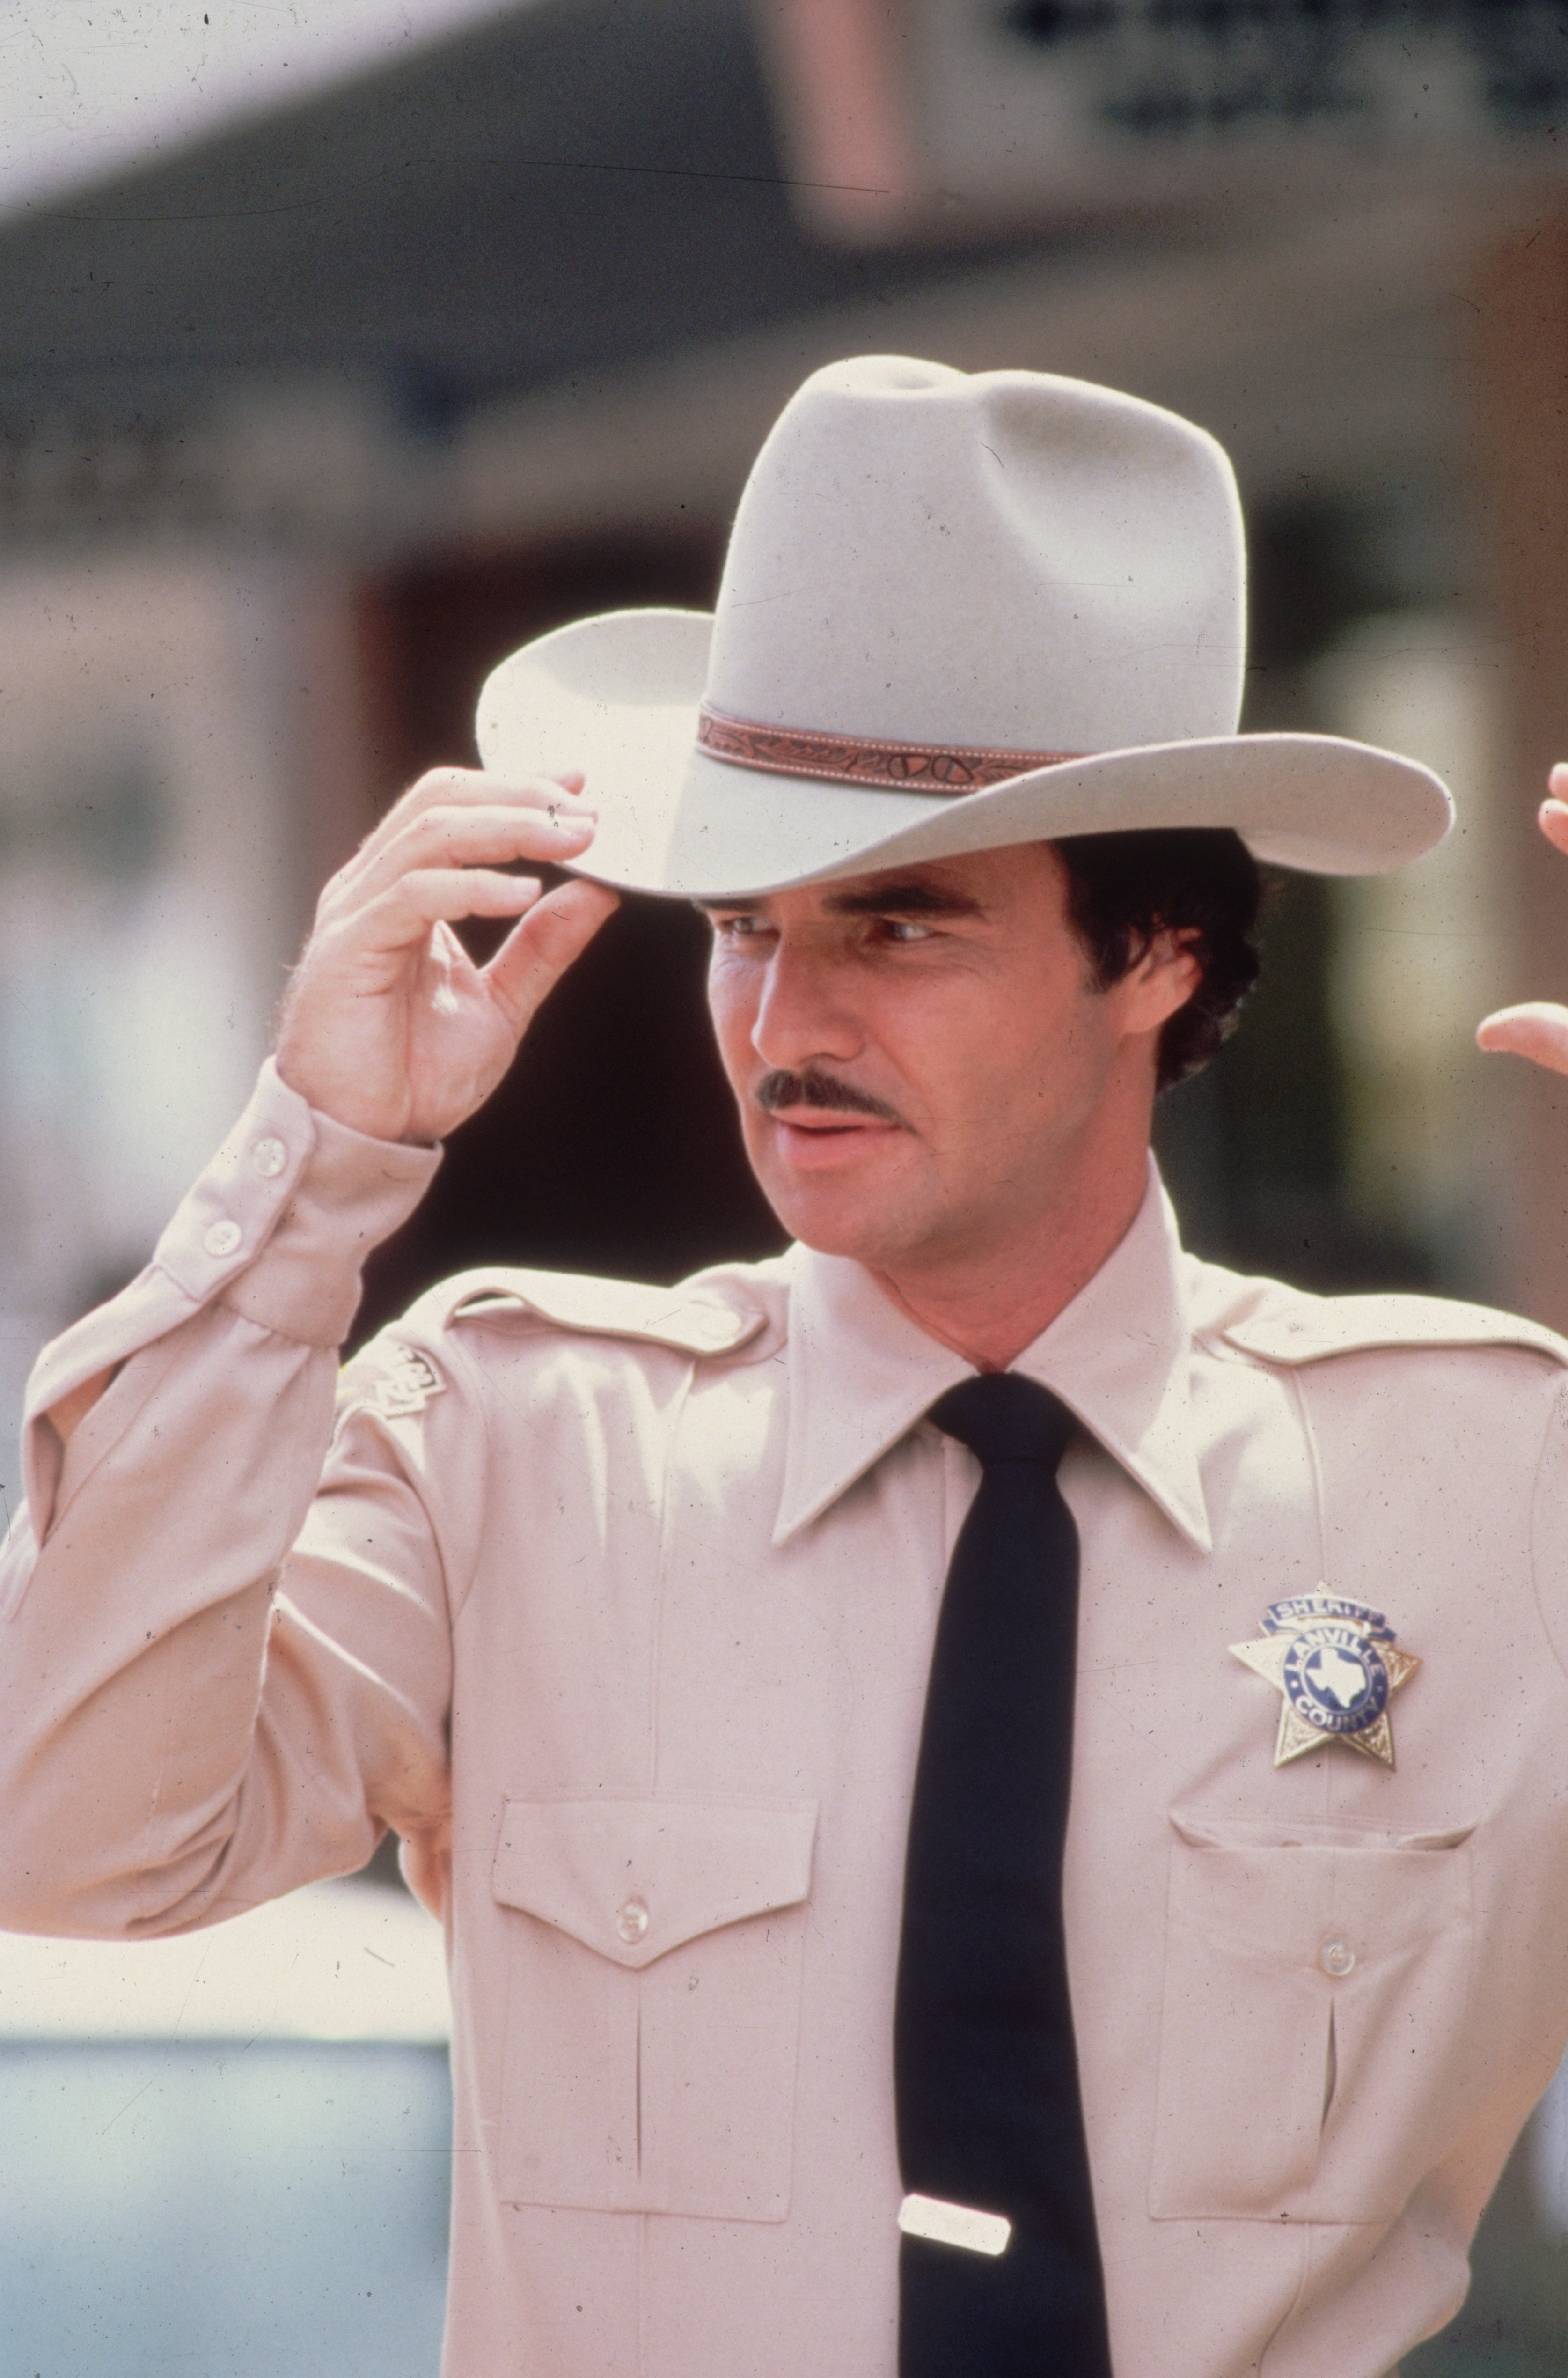 Film star Burt Reynolds as a sheriff circa 1985. | Source: Getty Images.